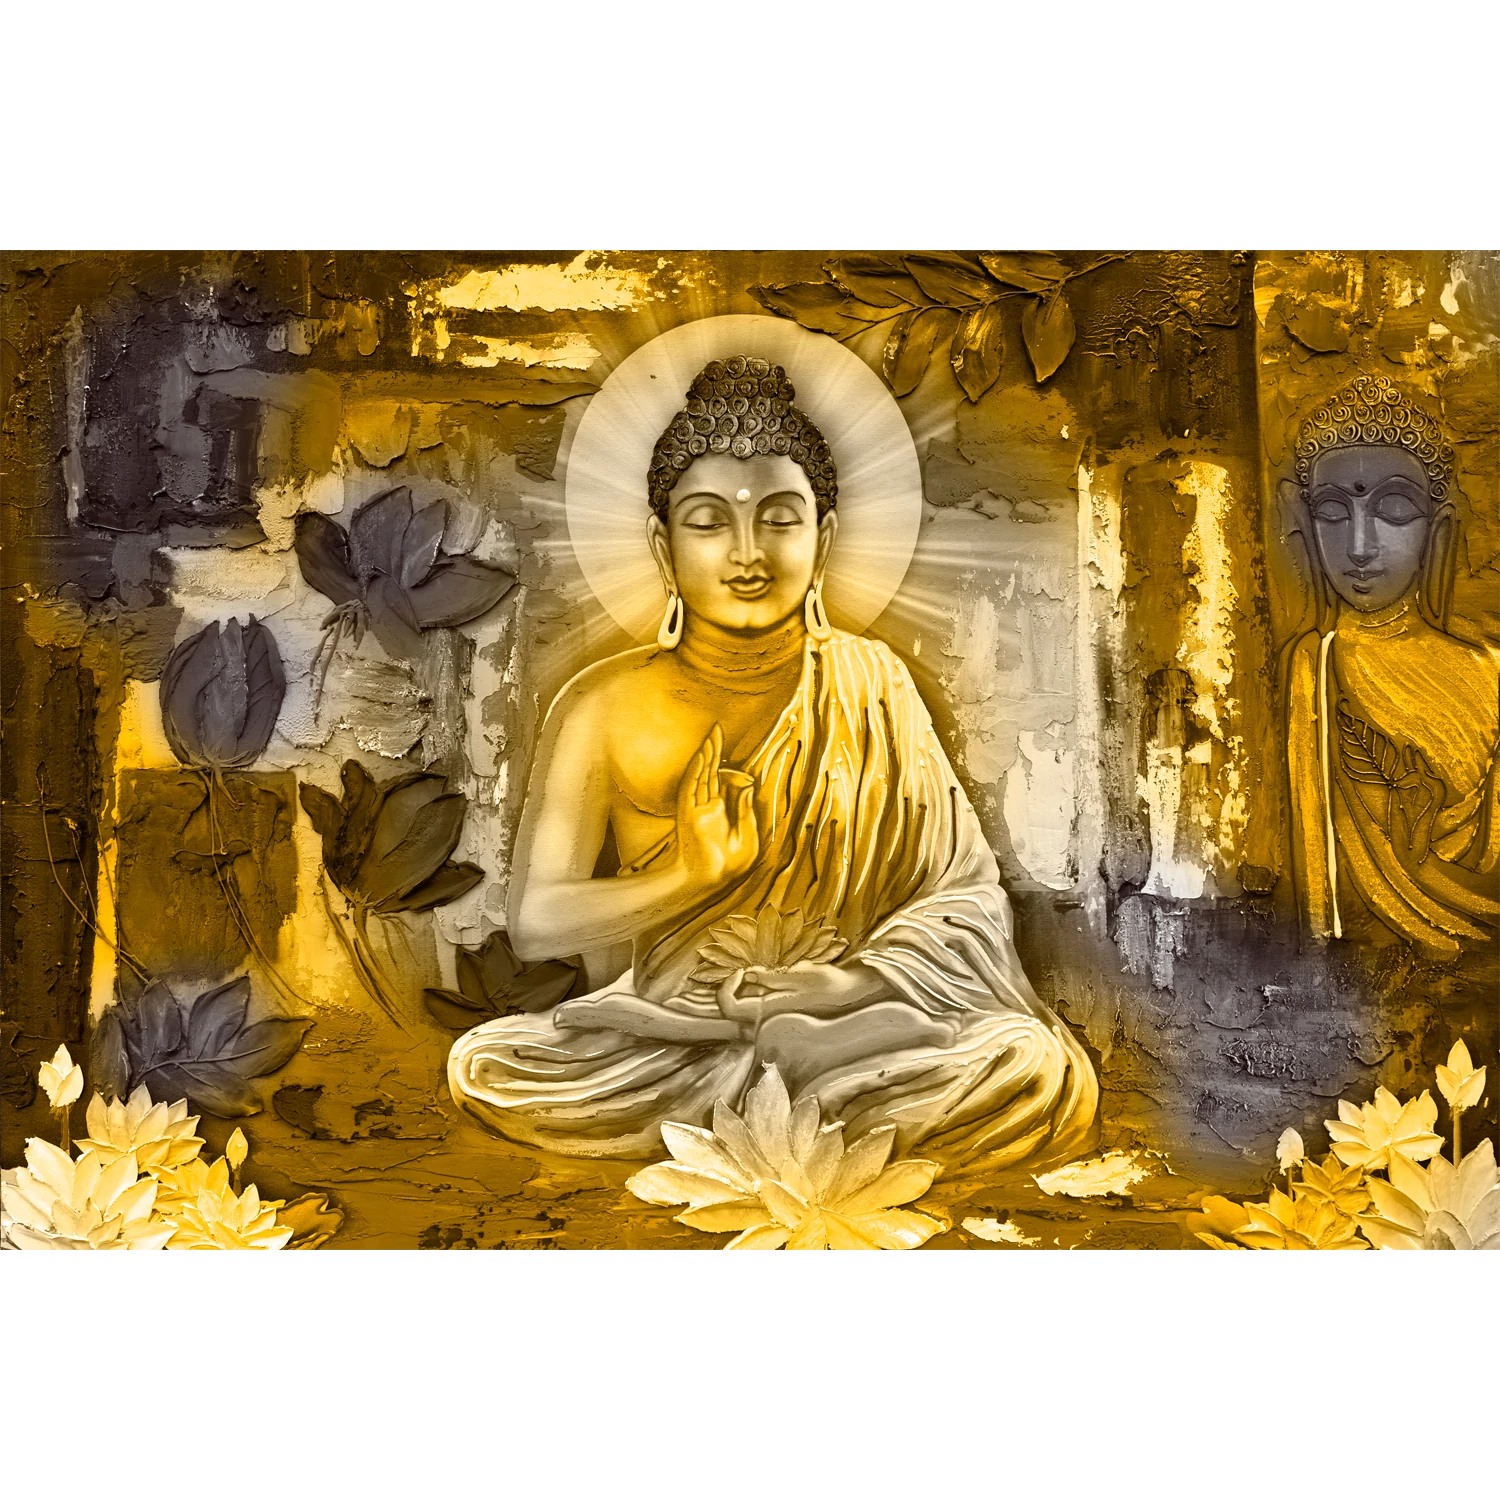 Lord Buddha Wallpapers